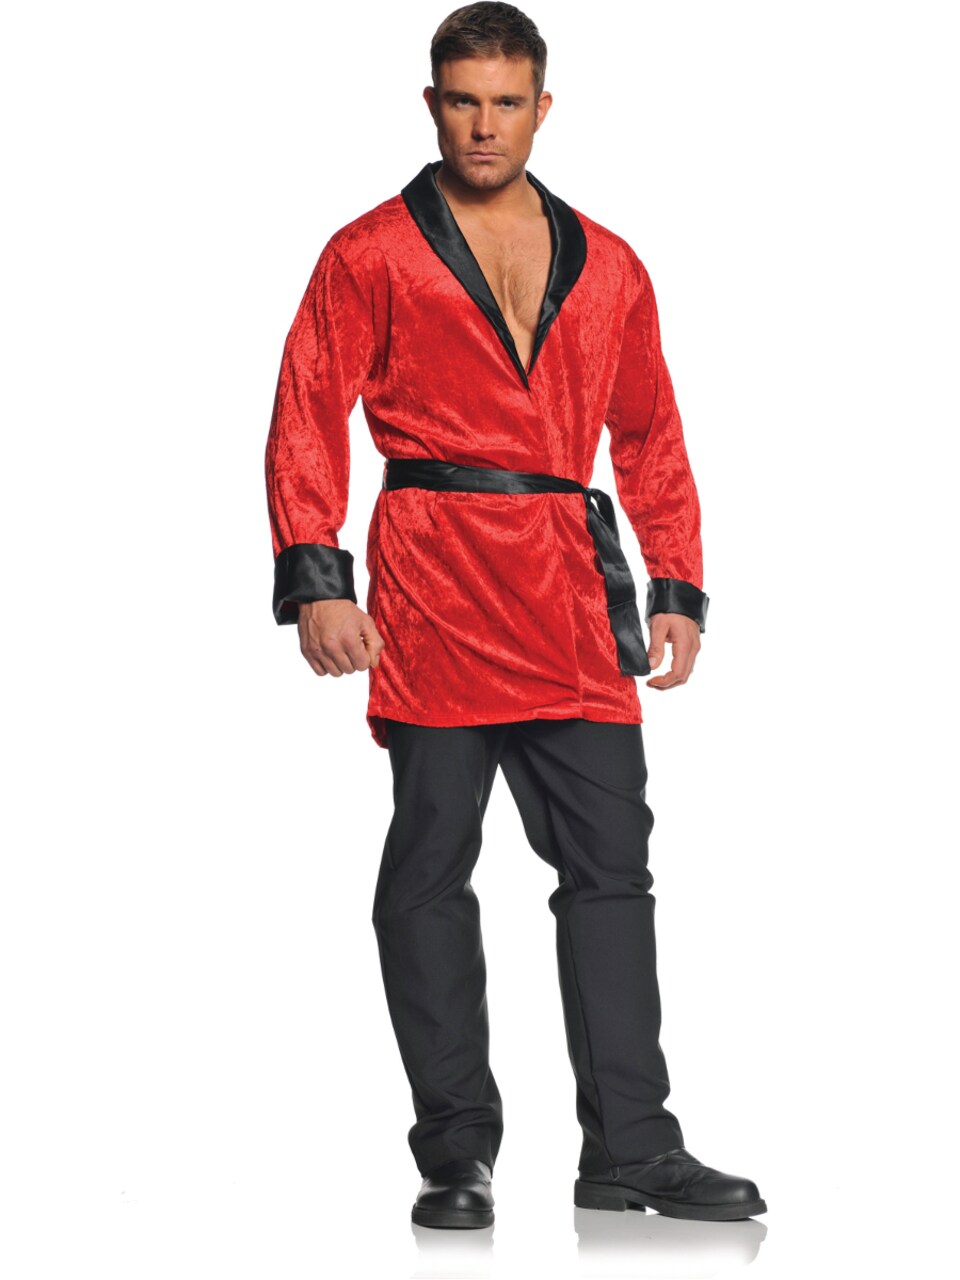 Men&#x27;s Millionaire Mansion Red Smoking Jacket Costume